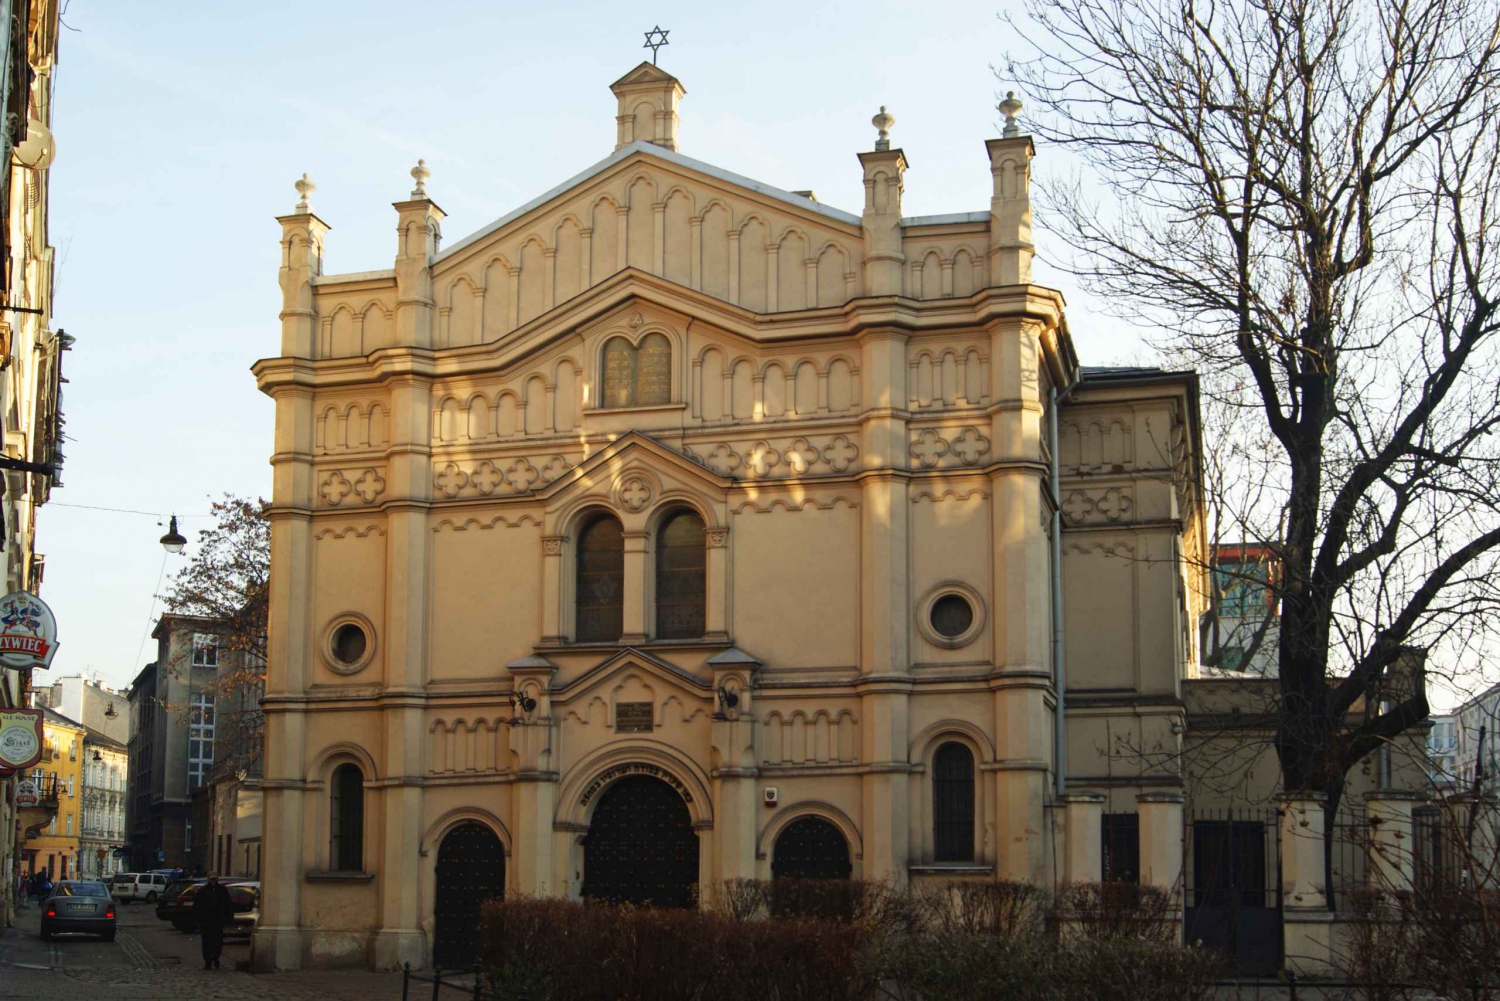 Krakow Kazimierz and Jewish Ghetto Tour with Synagogues